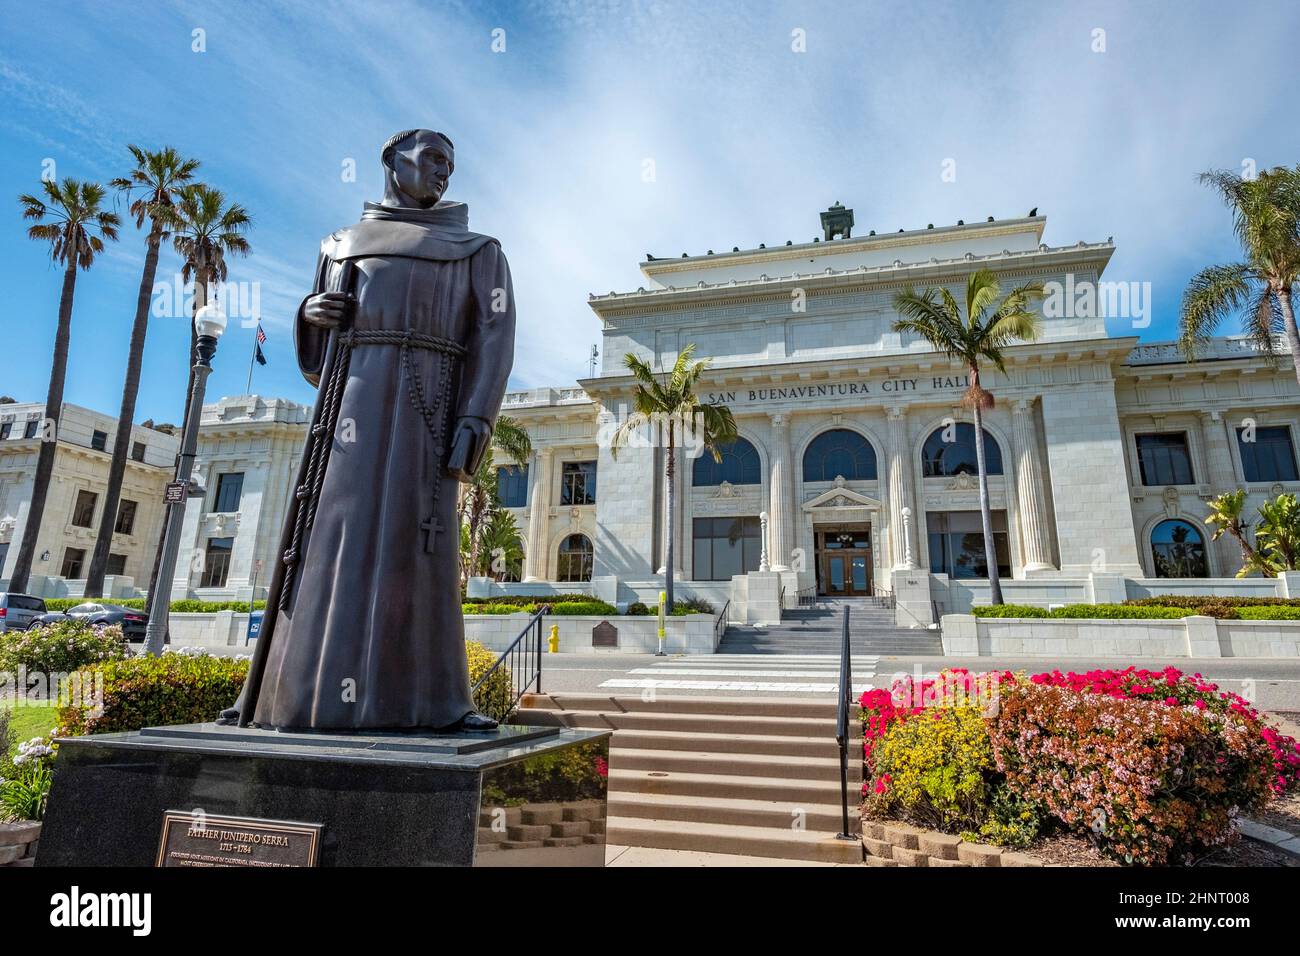 Ventura City Hall building with Father Junipero Serra statue in front Stock Photo